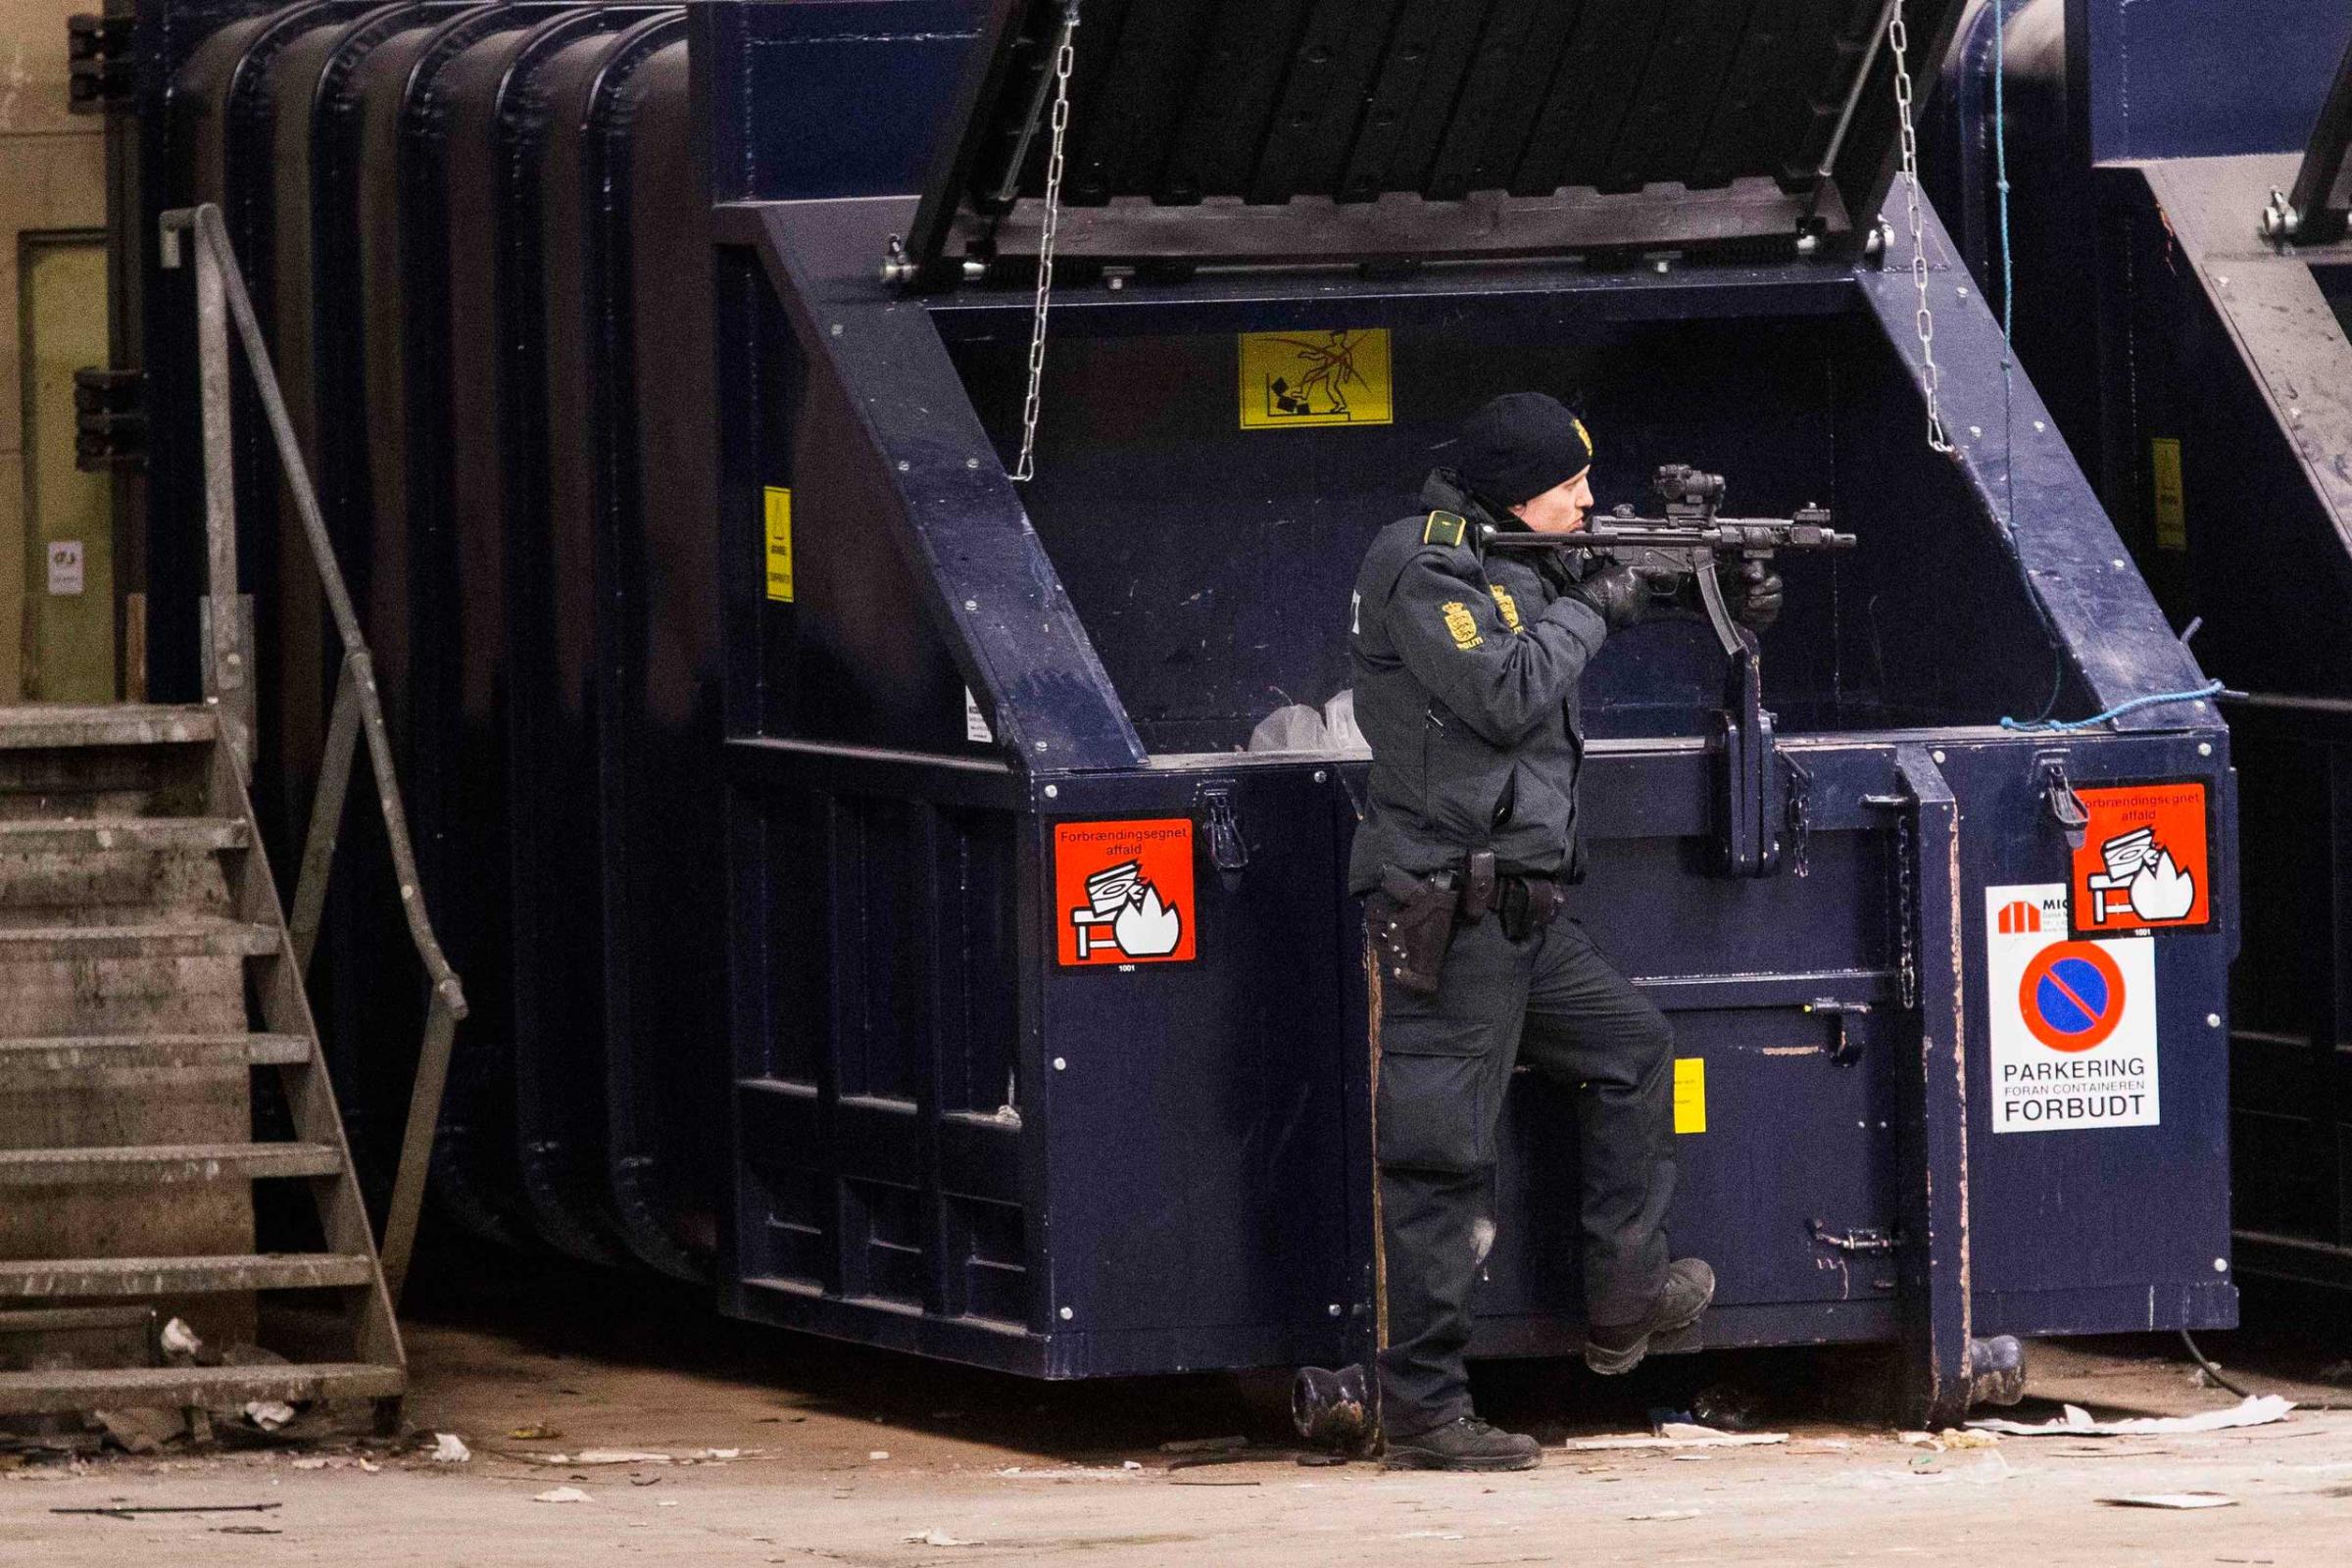 Armed police works in a cordoned off area in a street near Norrebro Station following shootings in Copenhagen, Feb. 15, 2015.